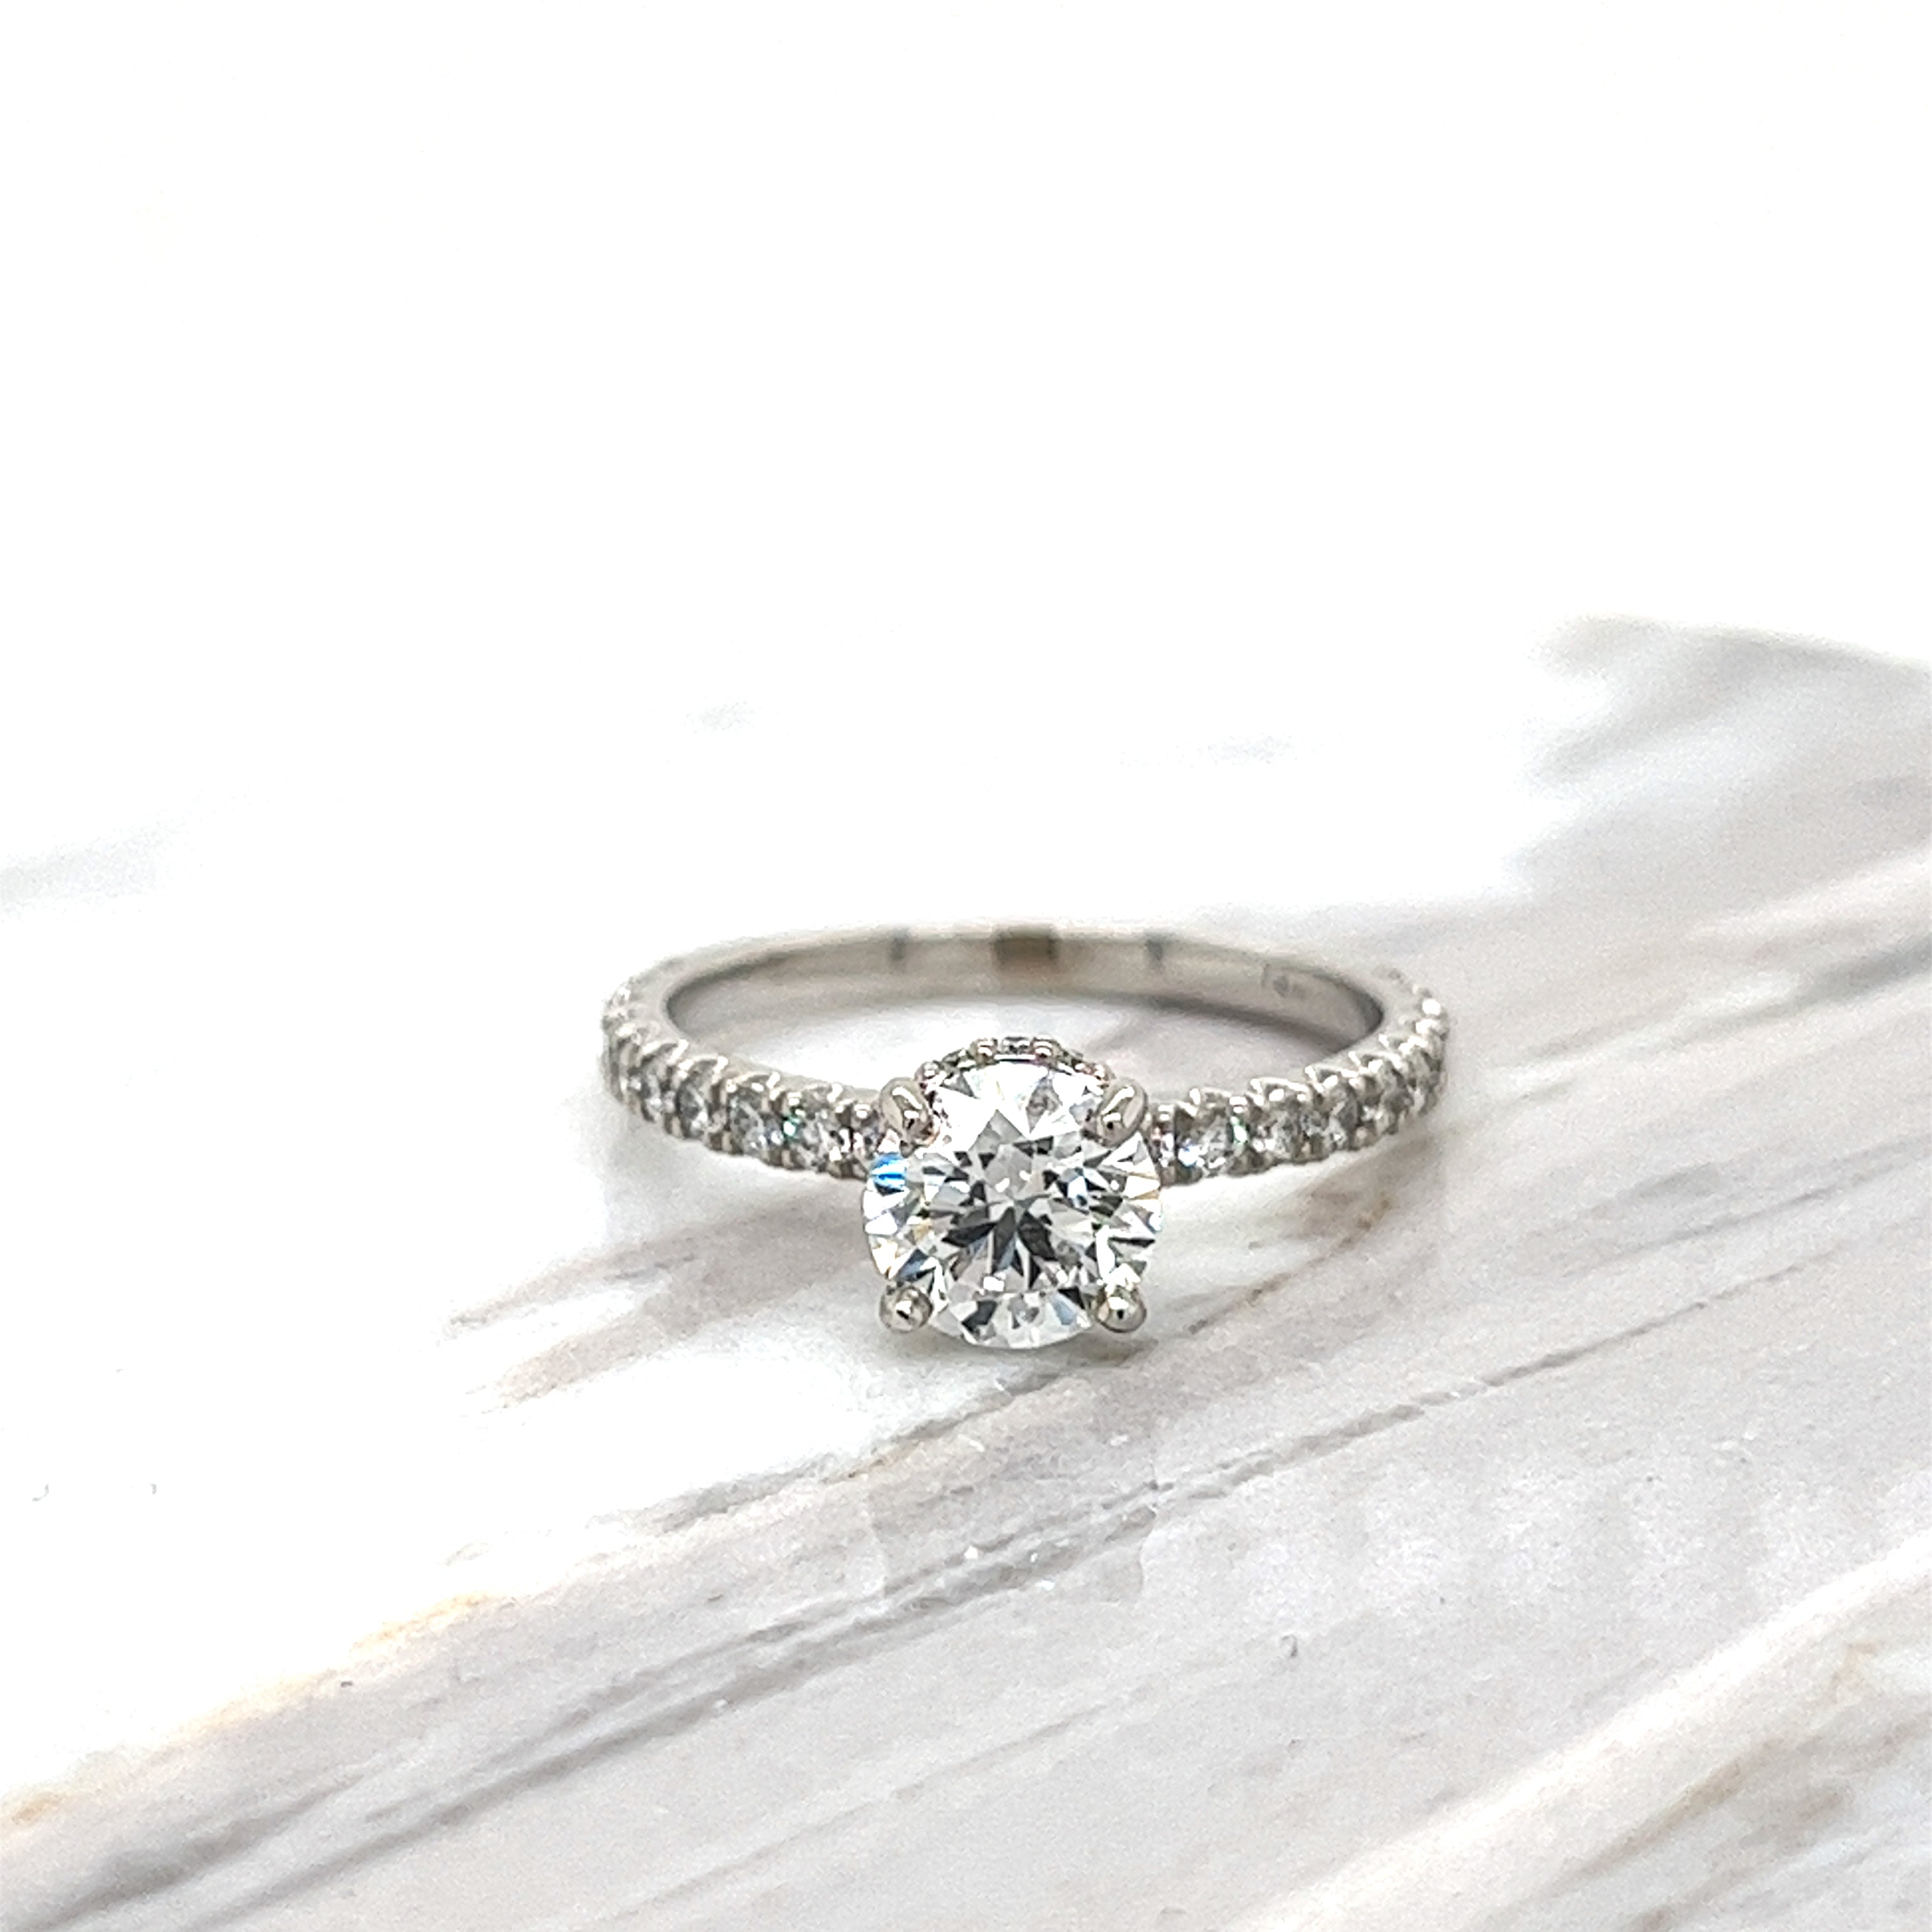 engagement rings diamond under 3000｜TikTok Search